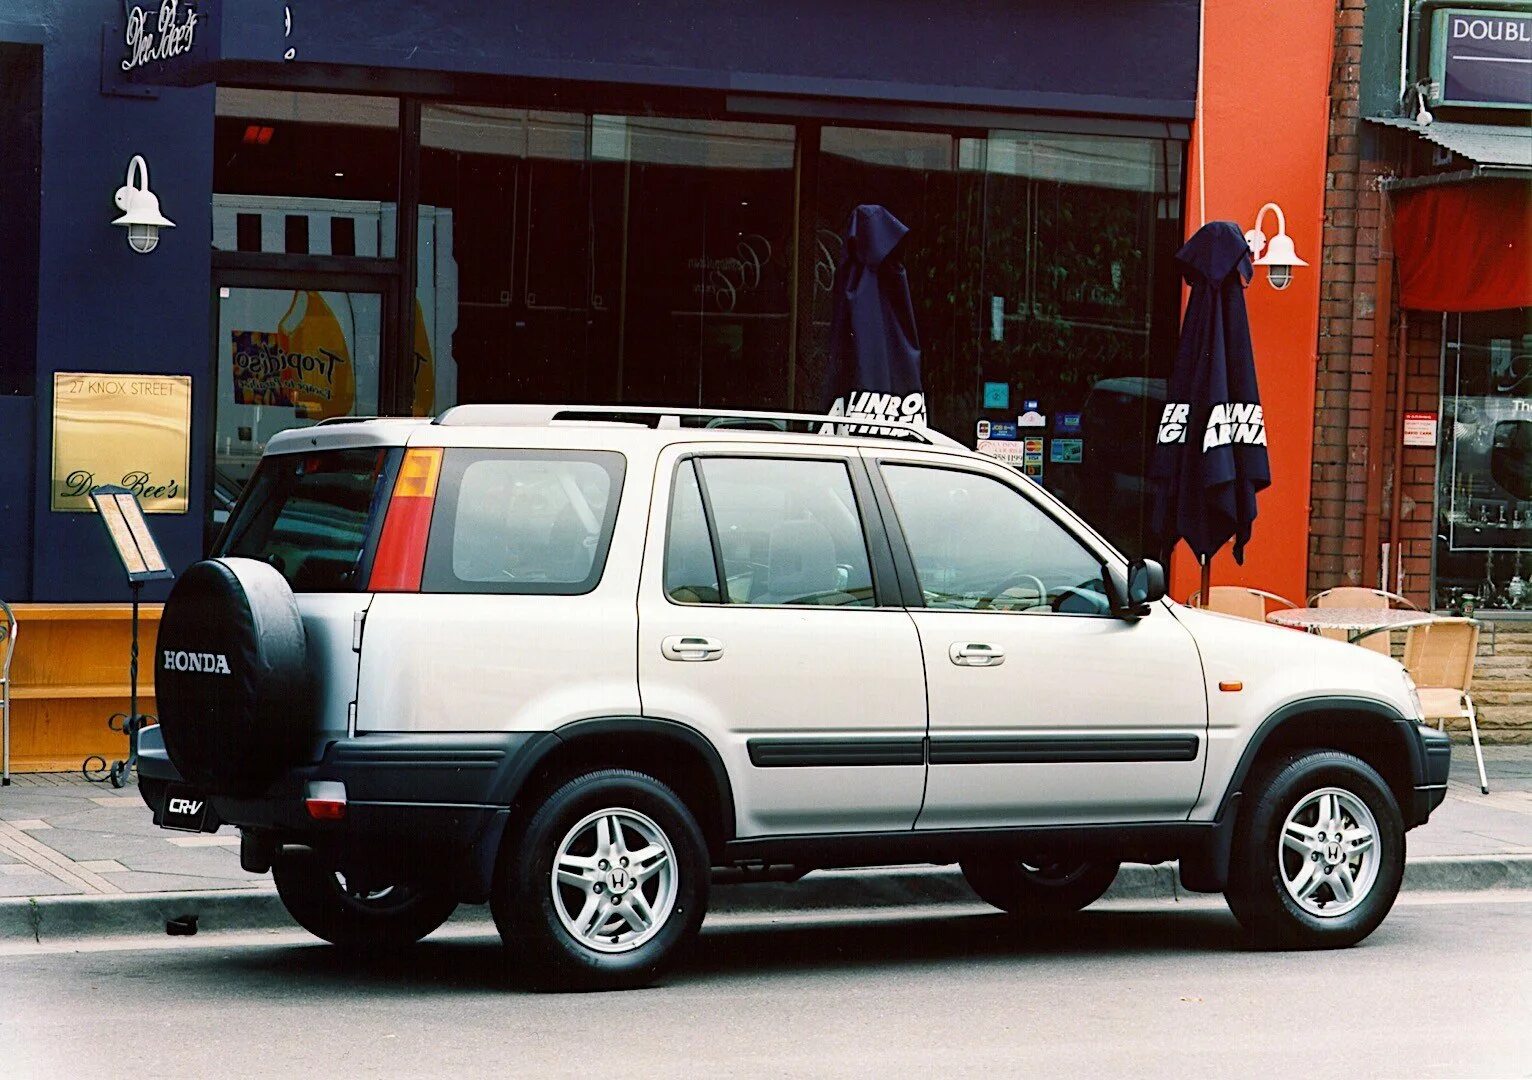 Хонда црв 1997 год. Honda CRV 1997. Honda CR-V rd1 1997. Хонда СРВ 1997. Honda CR-V 1 2001.